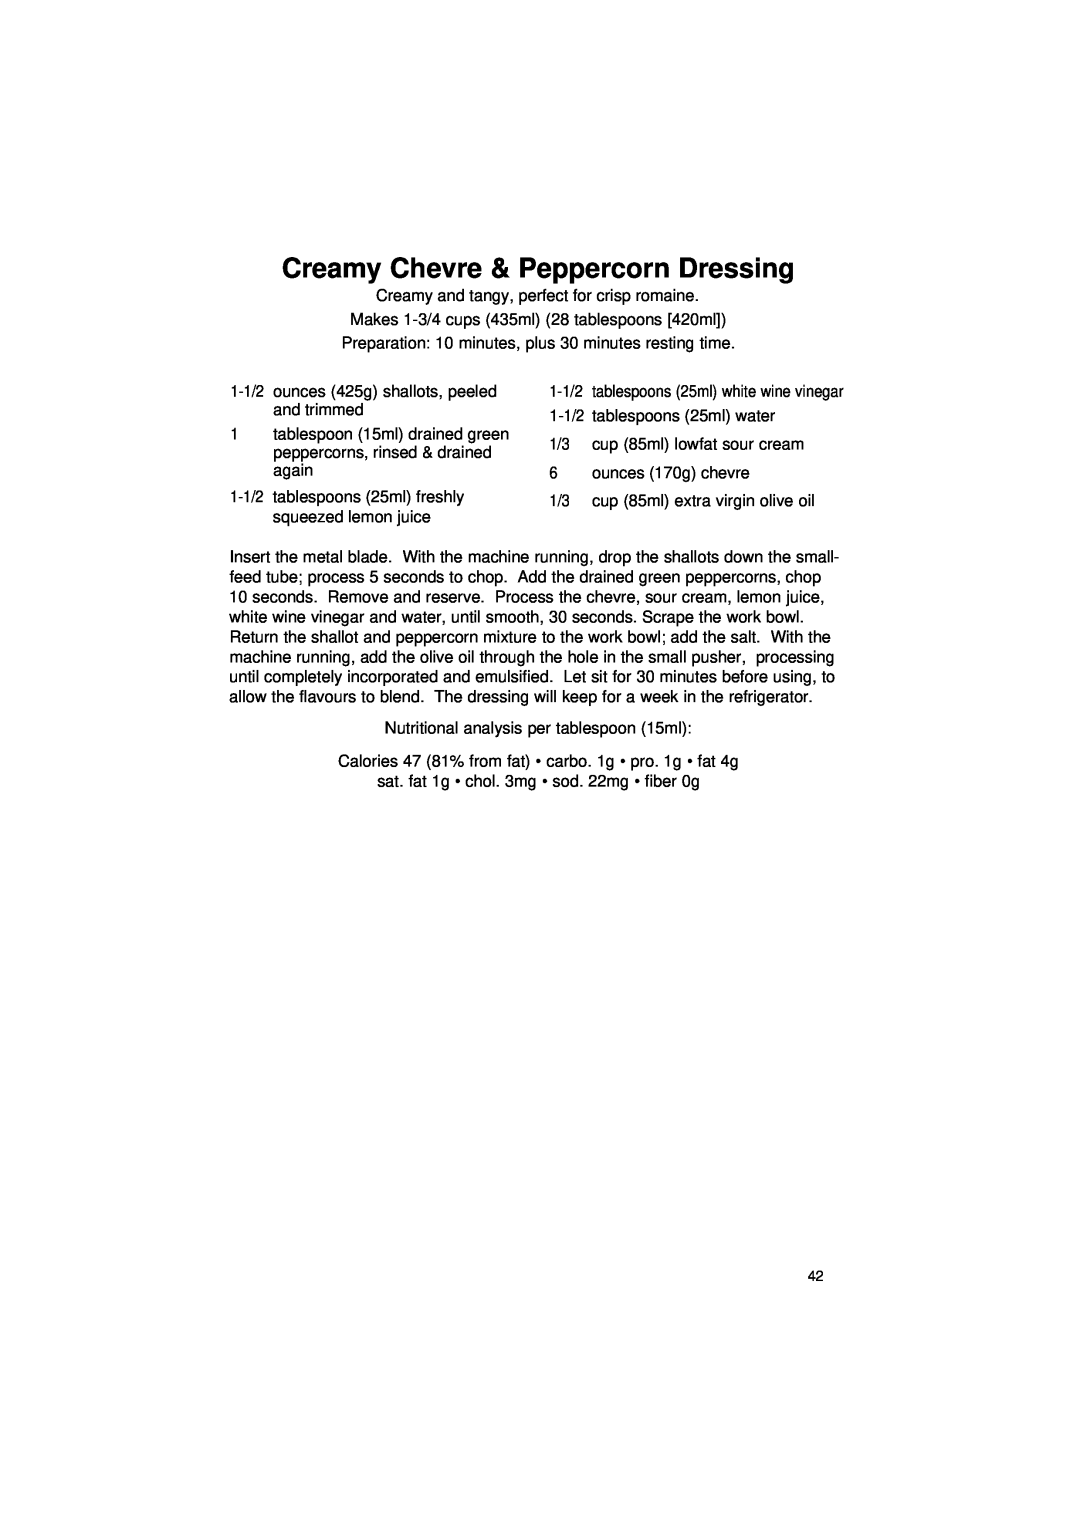 Cuisinart DLC-2011C manual Creamy Chevre & Peppercorn Dressing 